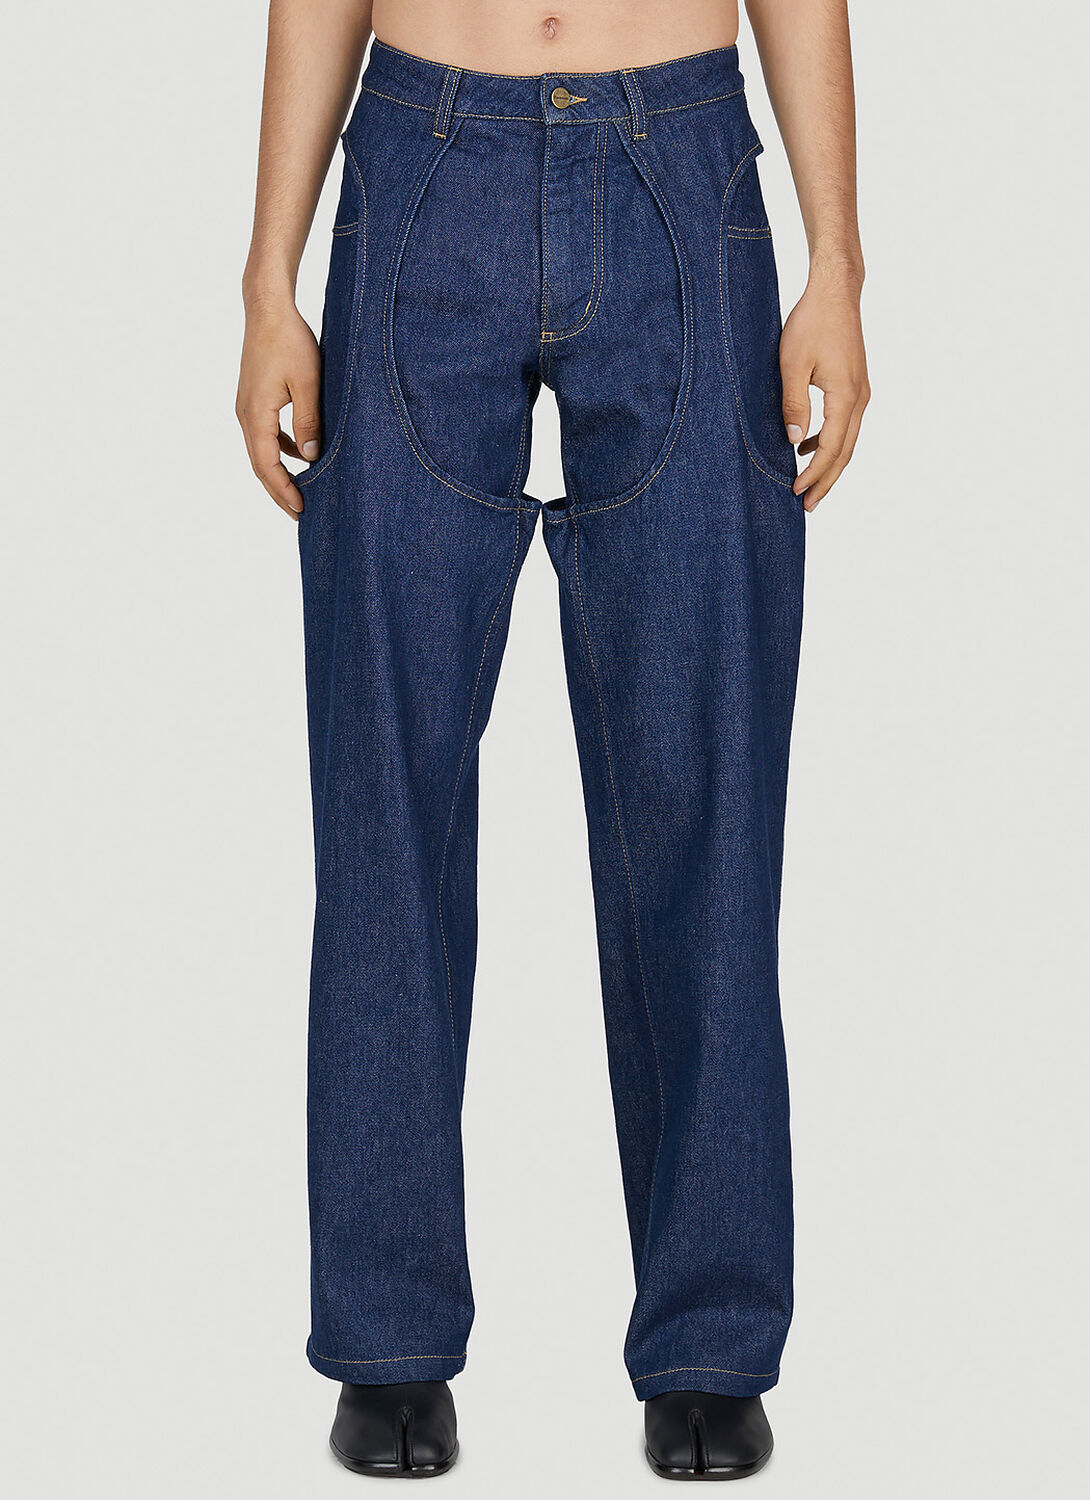 Ninamounah Overlay Jeans